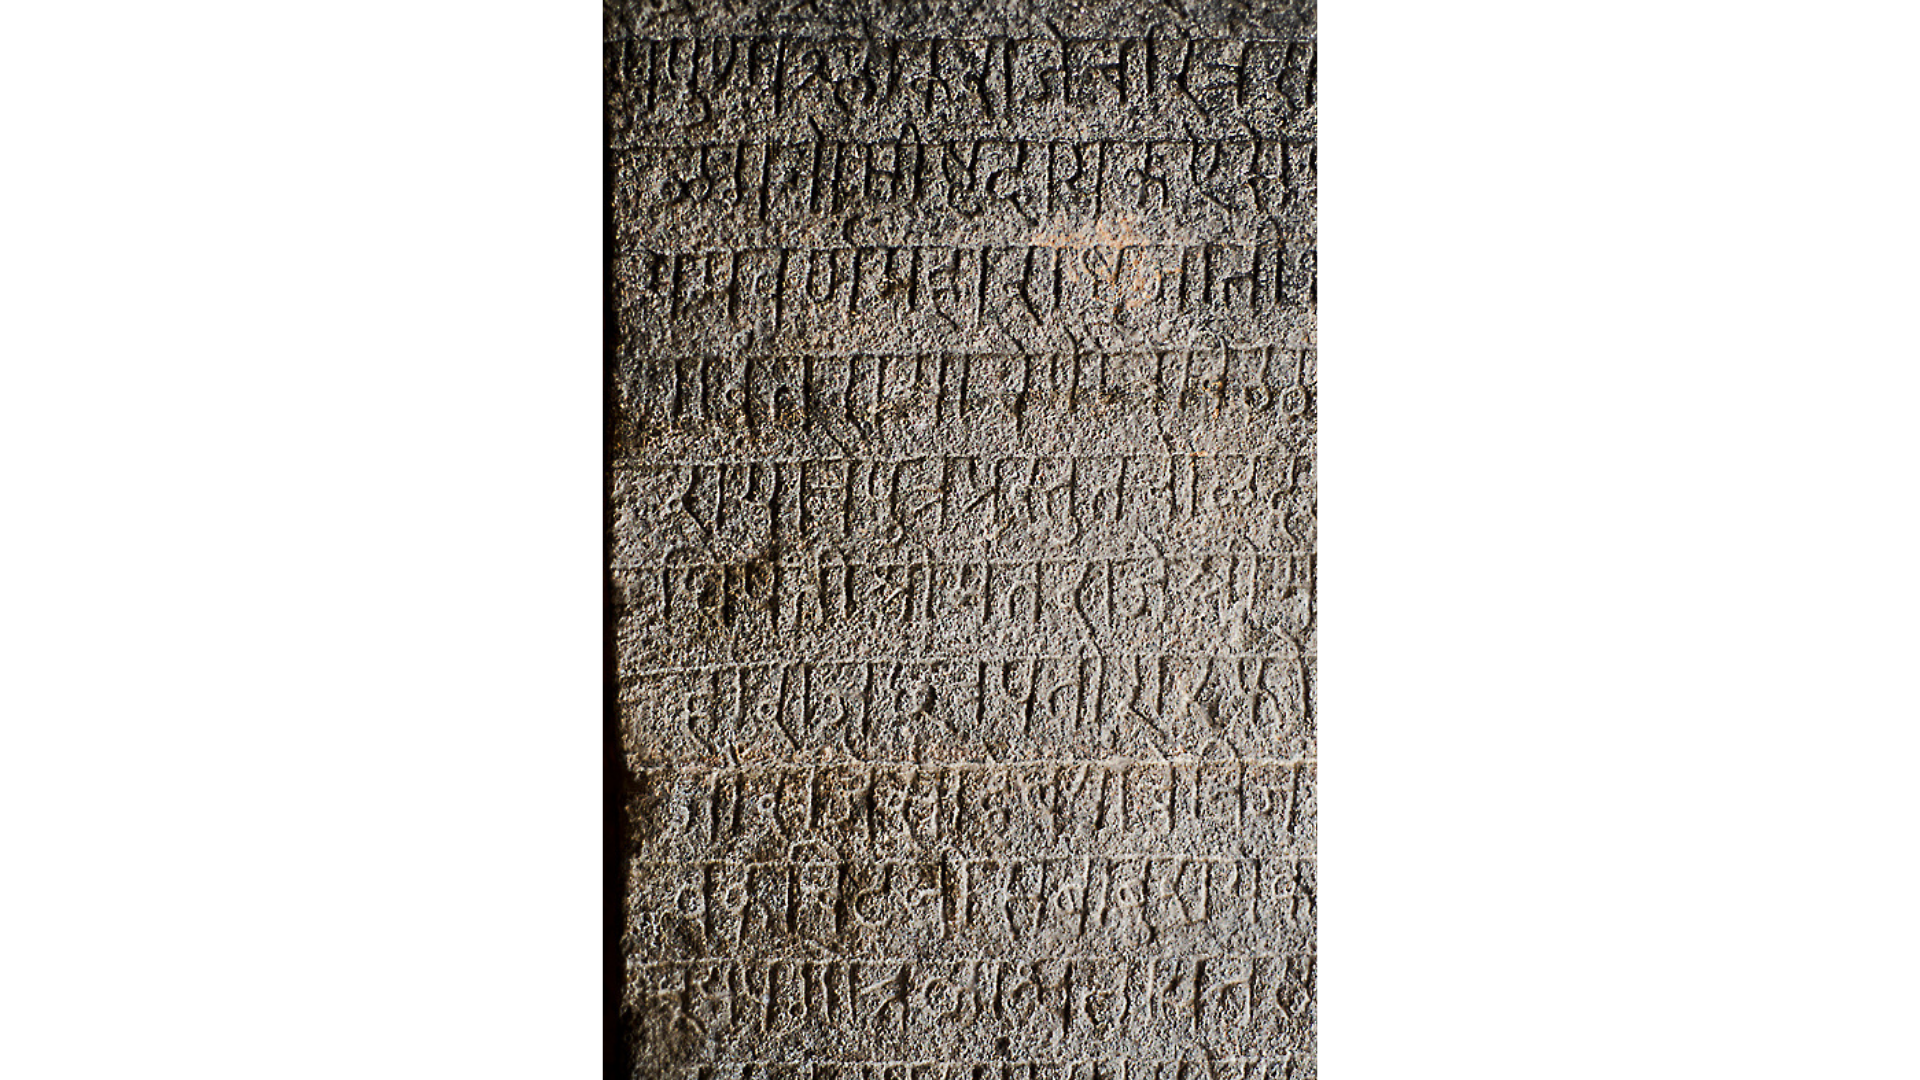 Marathi inscription at Brihadisvara temple complex, Thanjavur